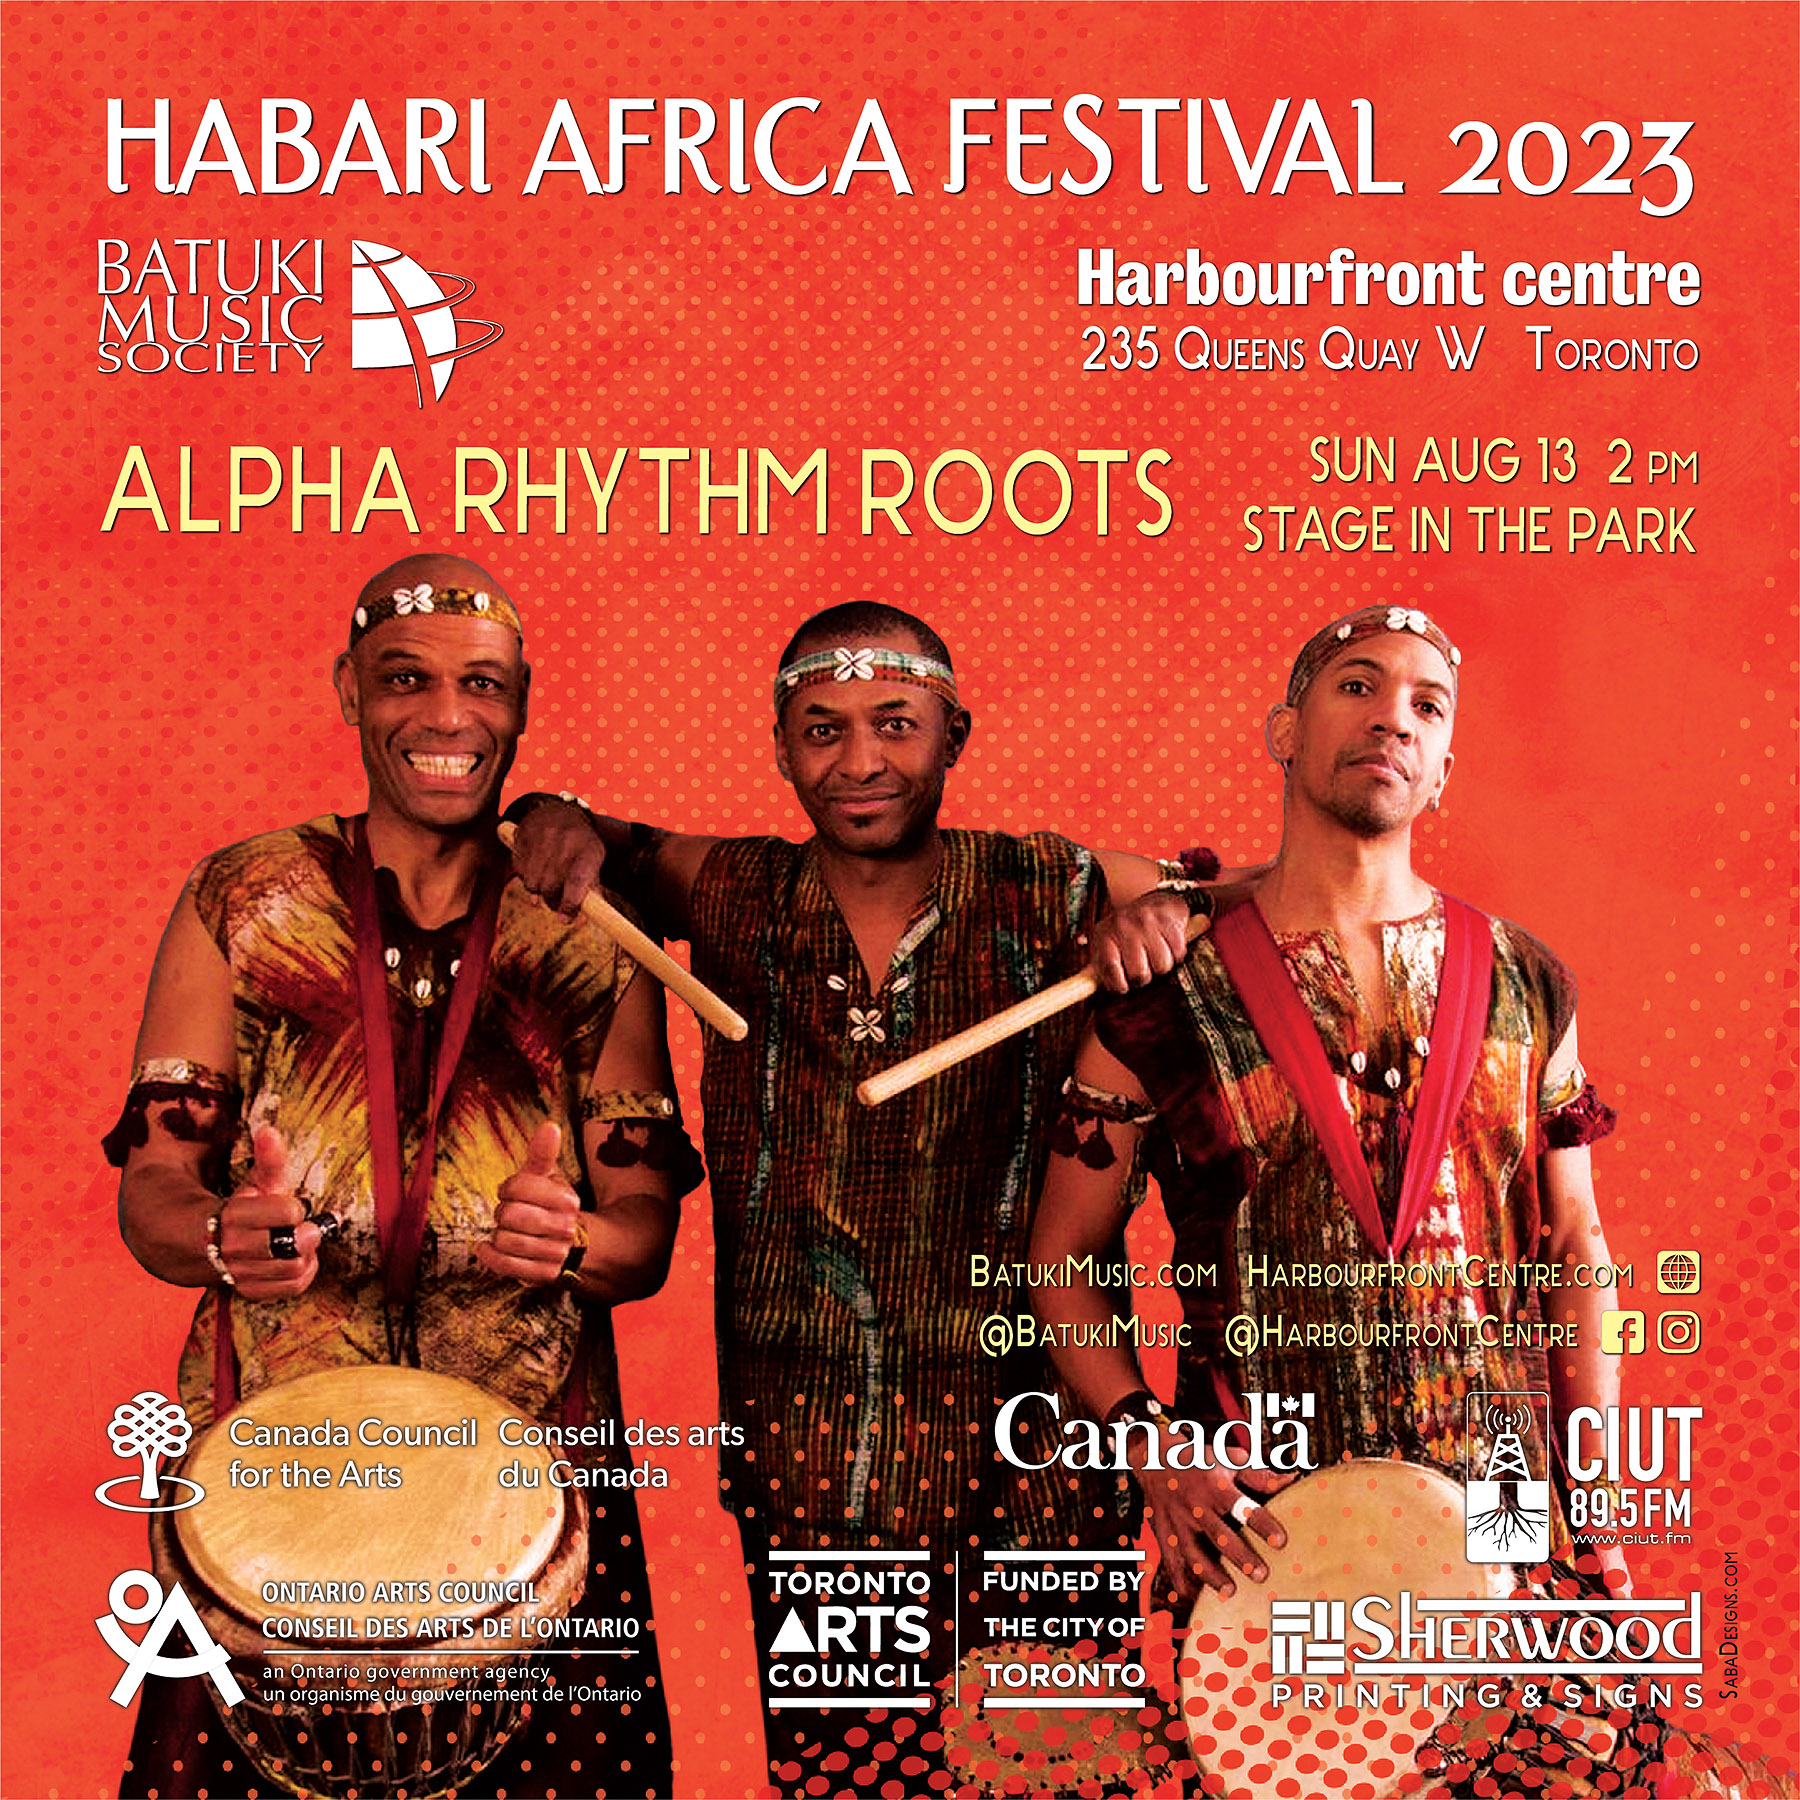 Habari Africa Live Festival 2023 by Batuki Music Society Alpha Rhythm Roots